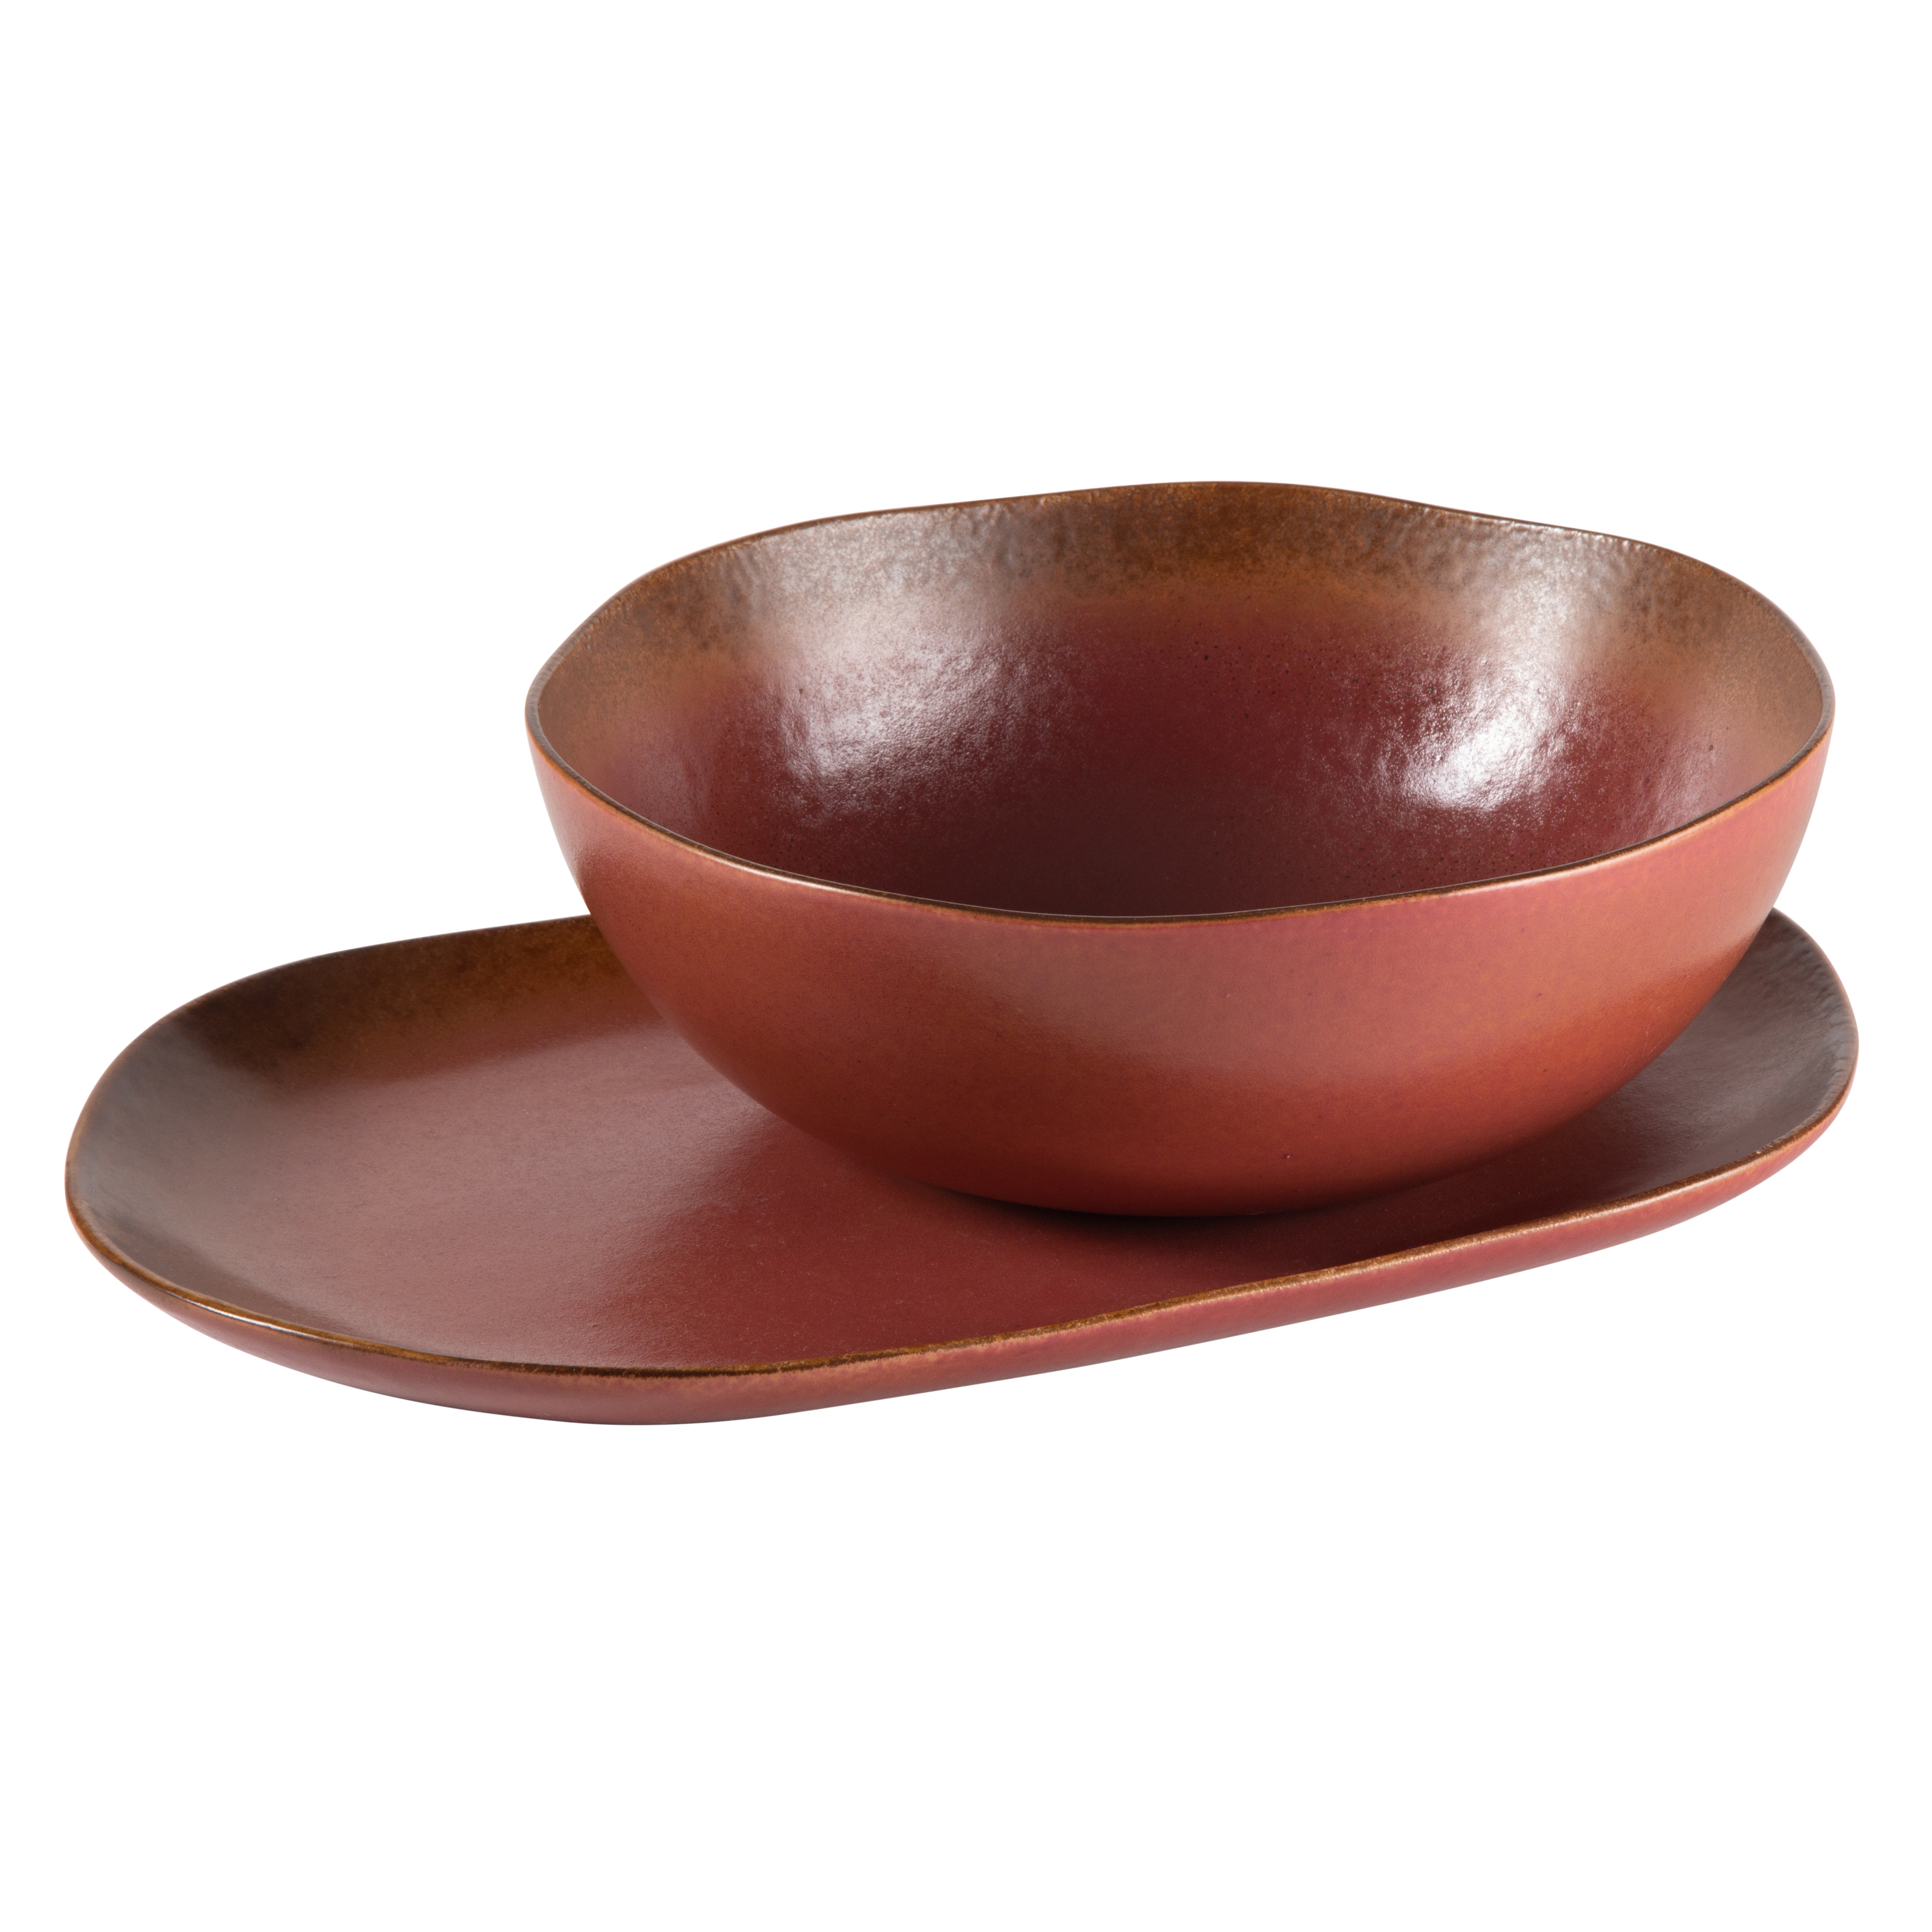 Bloomhouse Palermo Sun 2 Piece Serving Bowl and Oval Platter Stoneware Reactive Glaze Serveware Set